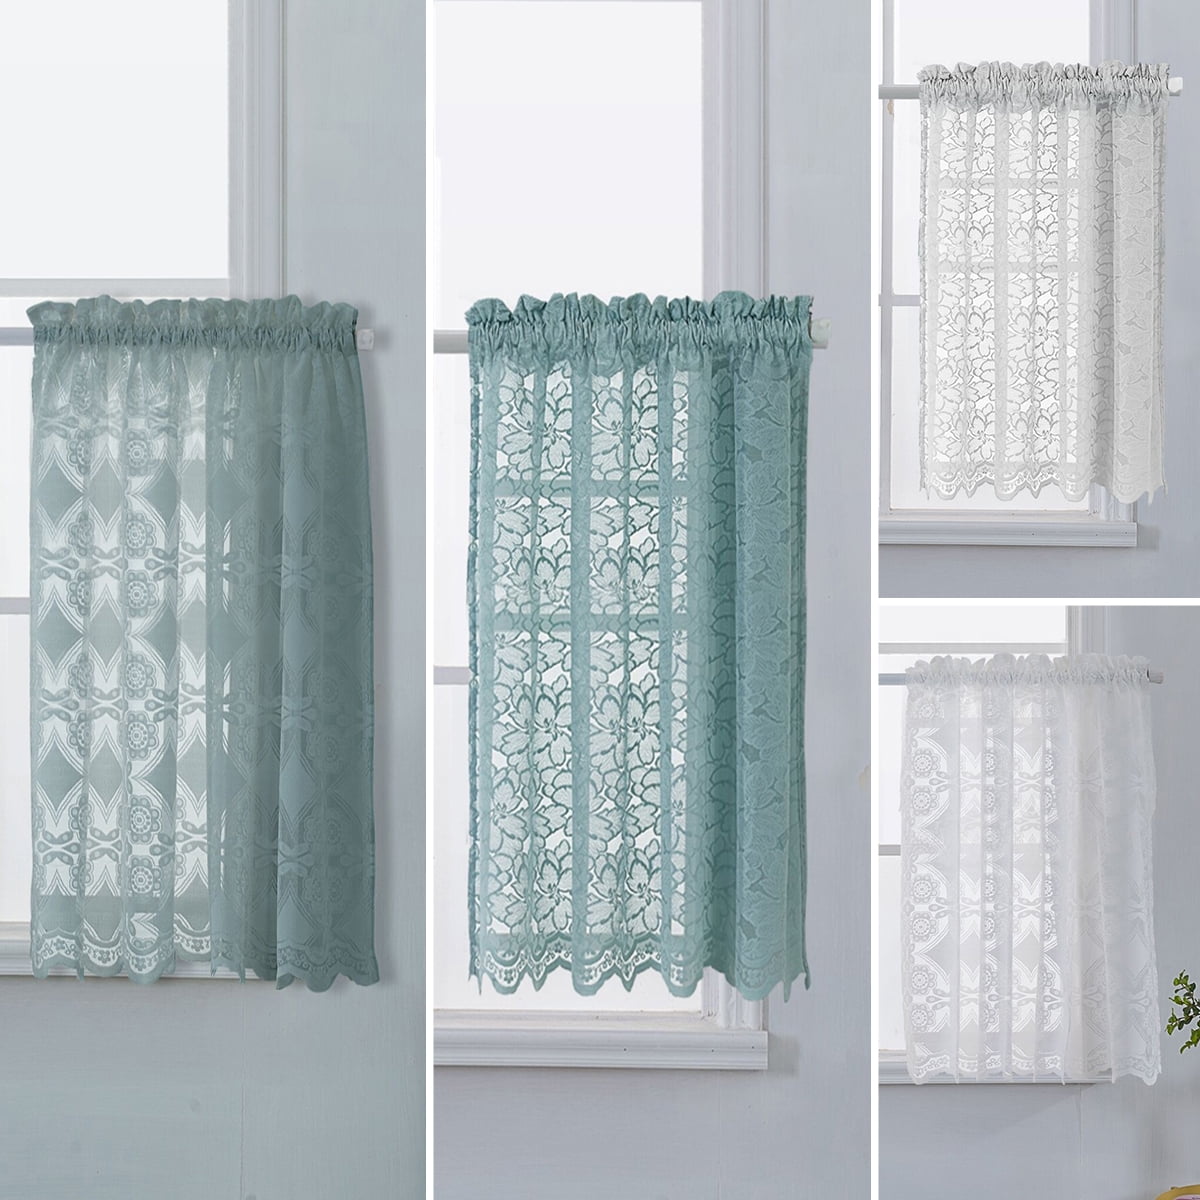 Amazing White Jacquard Net Curtain READY MADE All sizes Window decoration w lace 